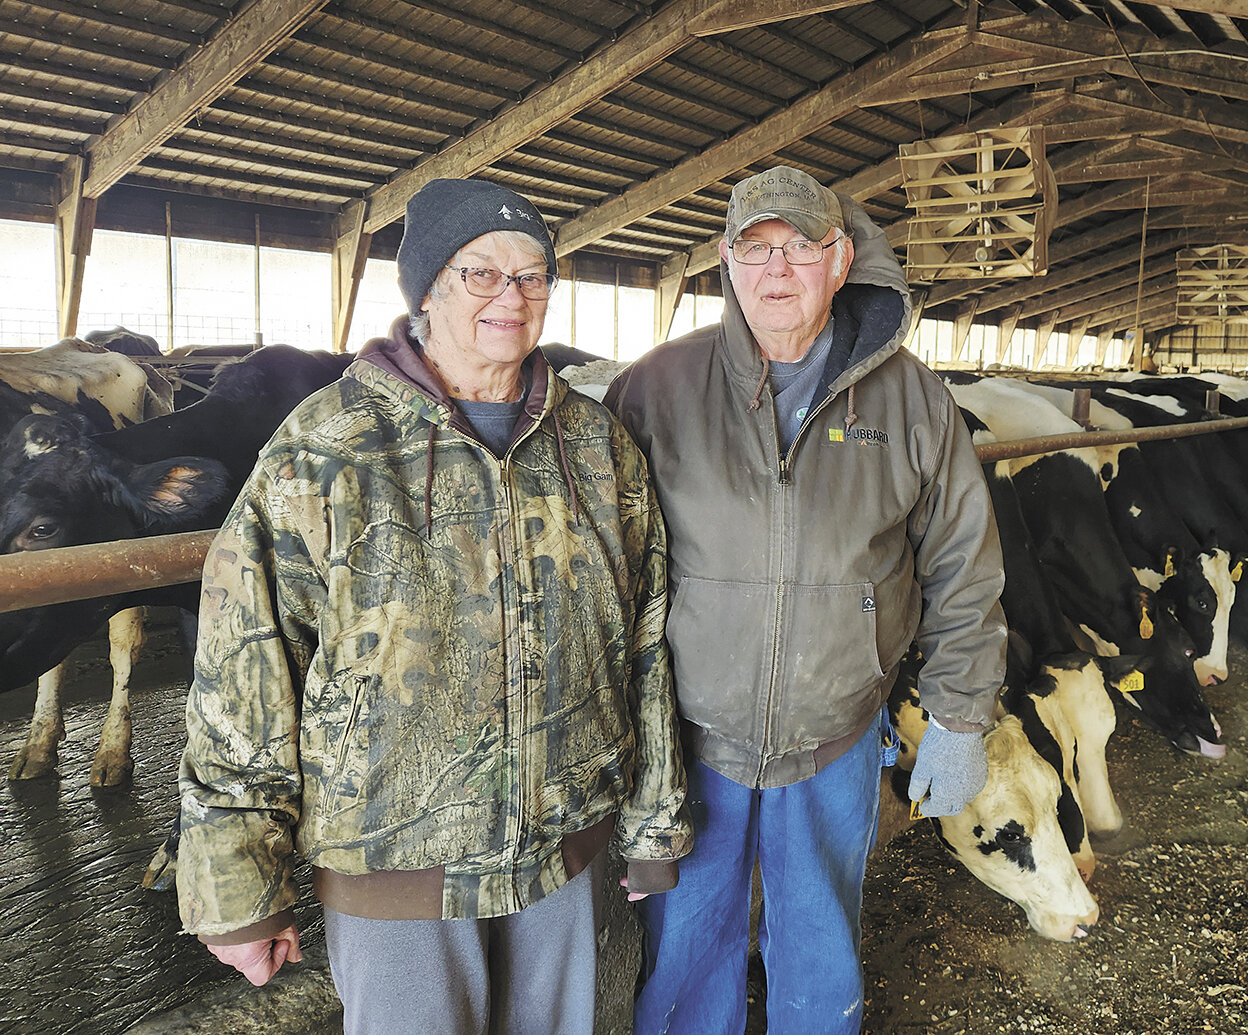 Carol and Tom Beringer take a break Jan. 29 at their farm near Farley, Iowa. The Beringers milk 180 cows with the help of their grown children Don, Lynn, Lisa and Wayne.